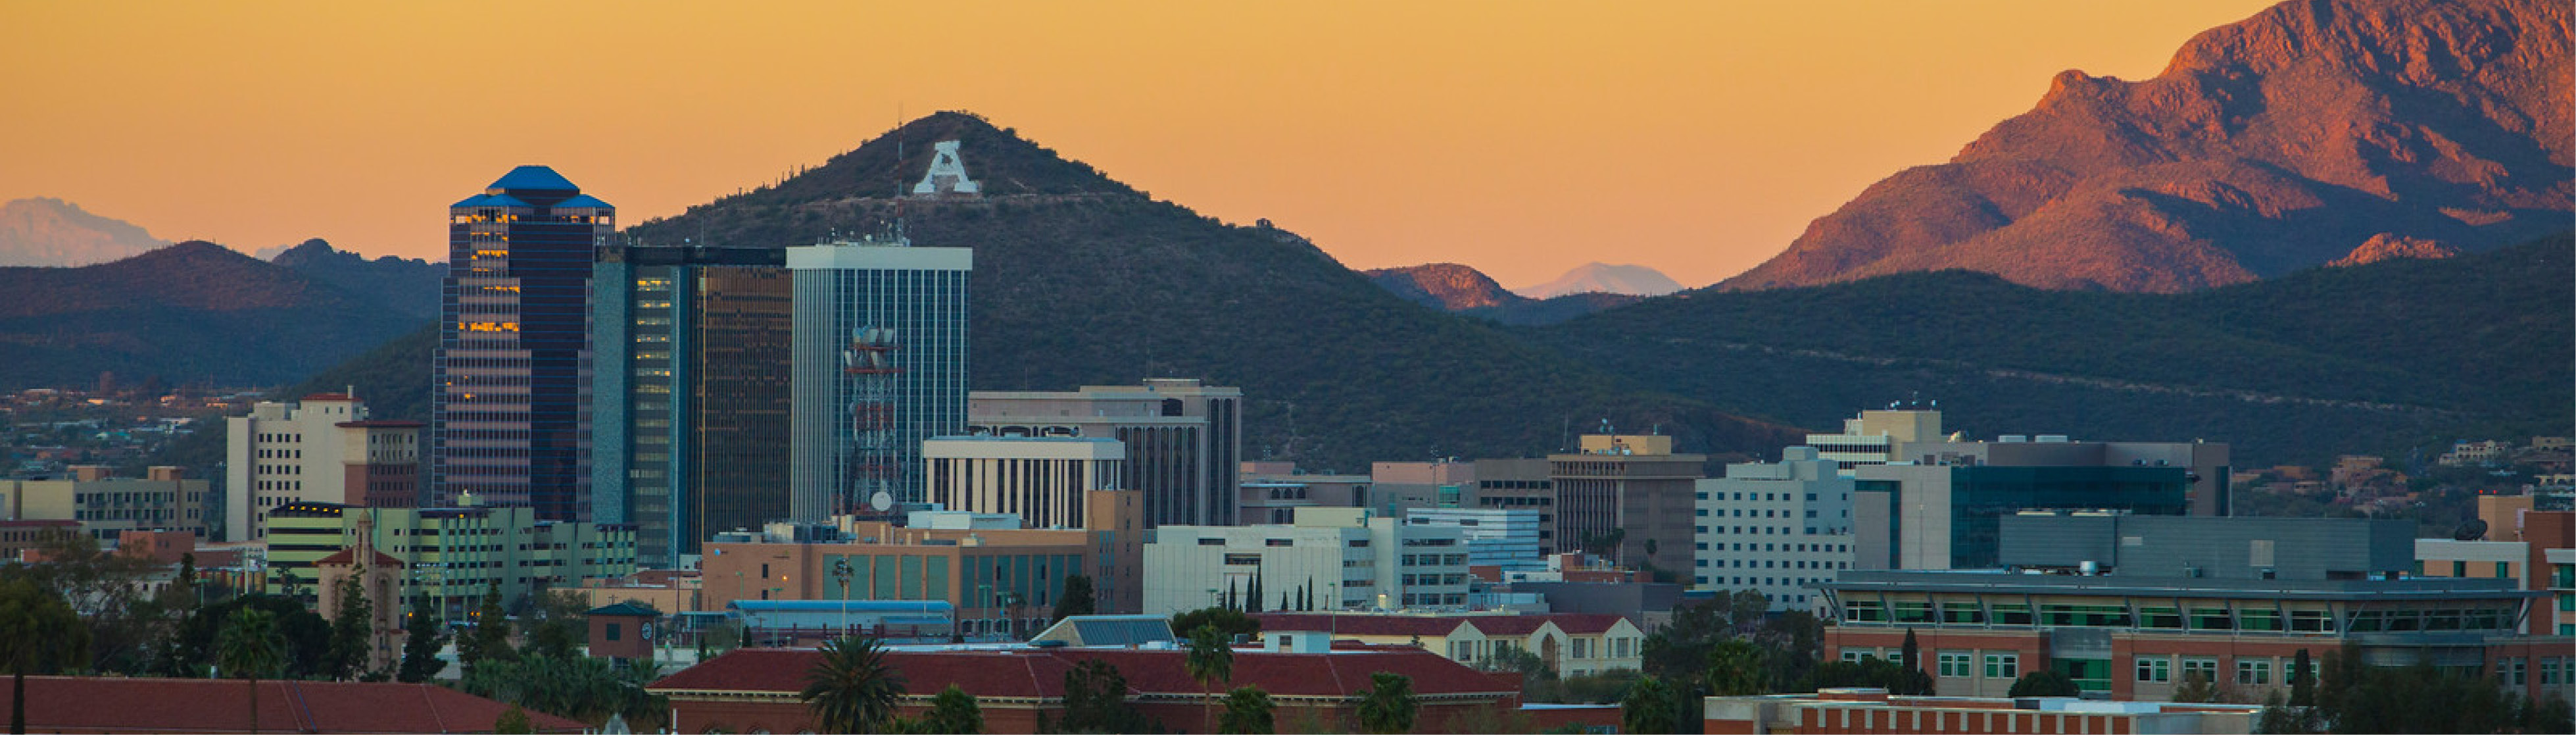 University of Arizona and "A" mountain